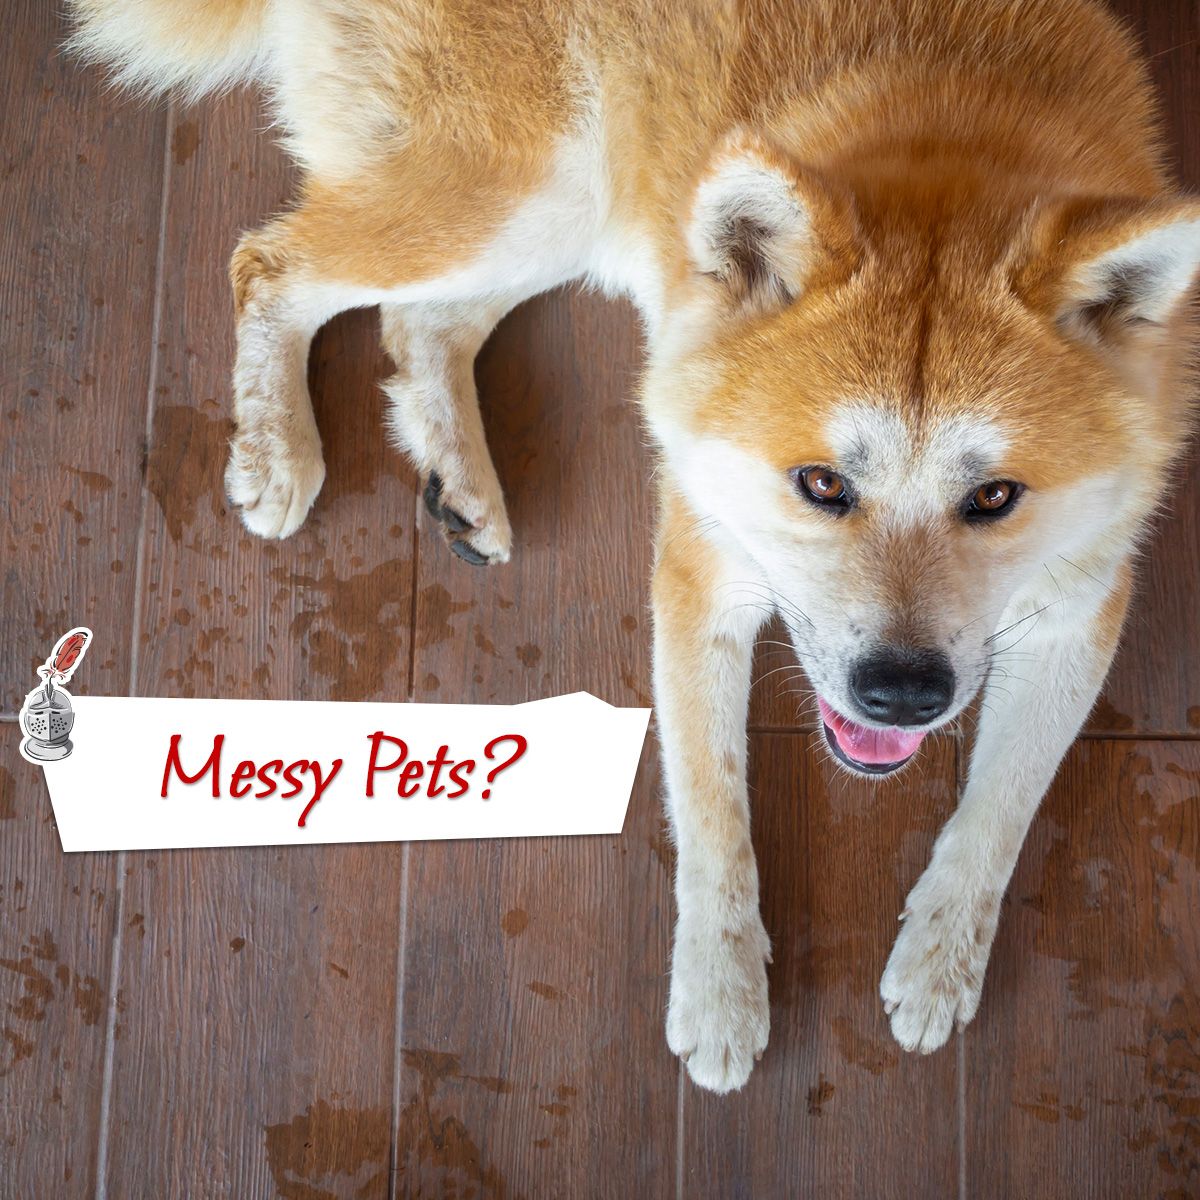 Messy Pets?